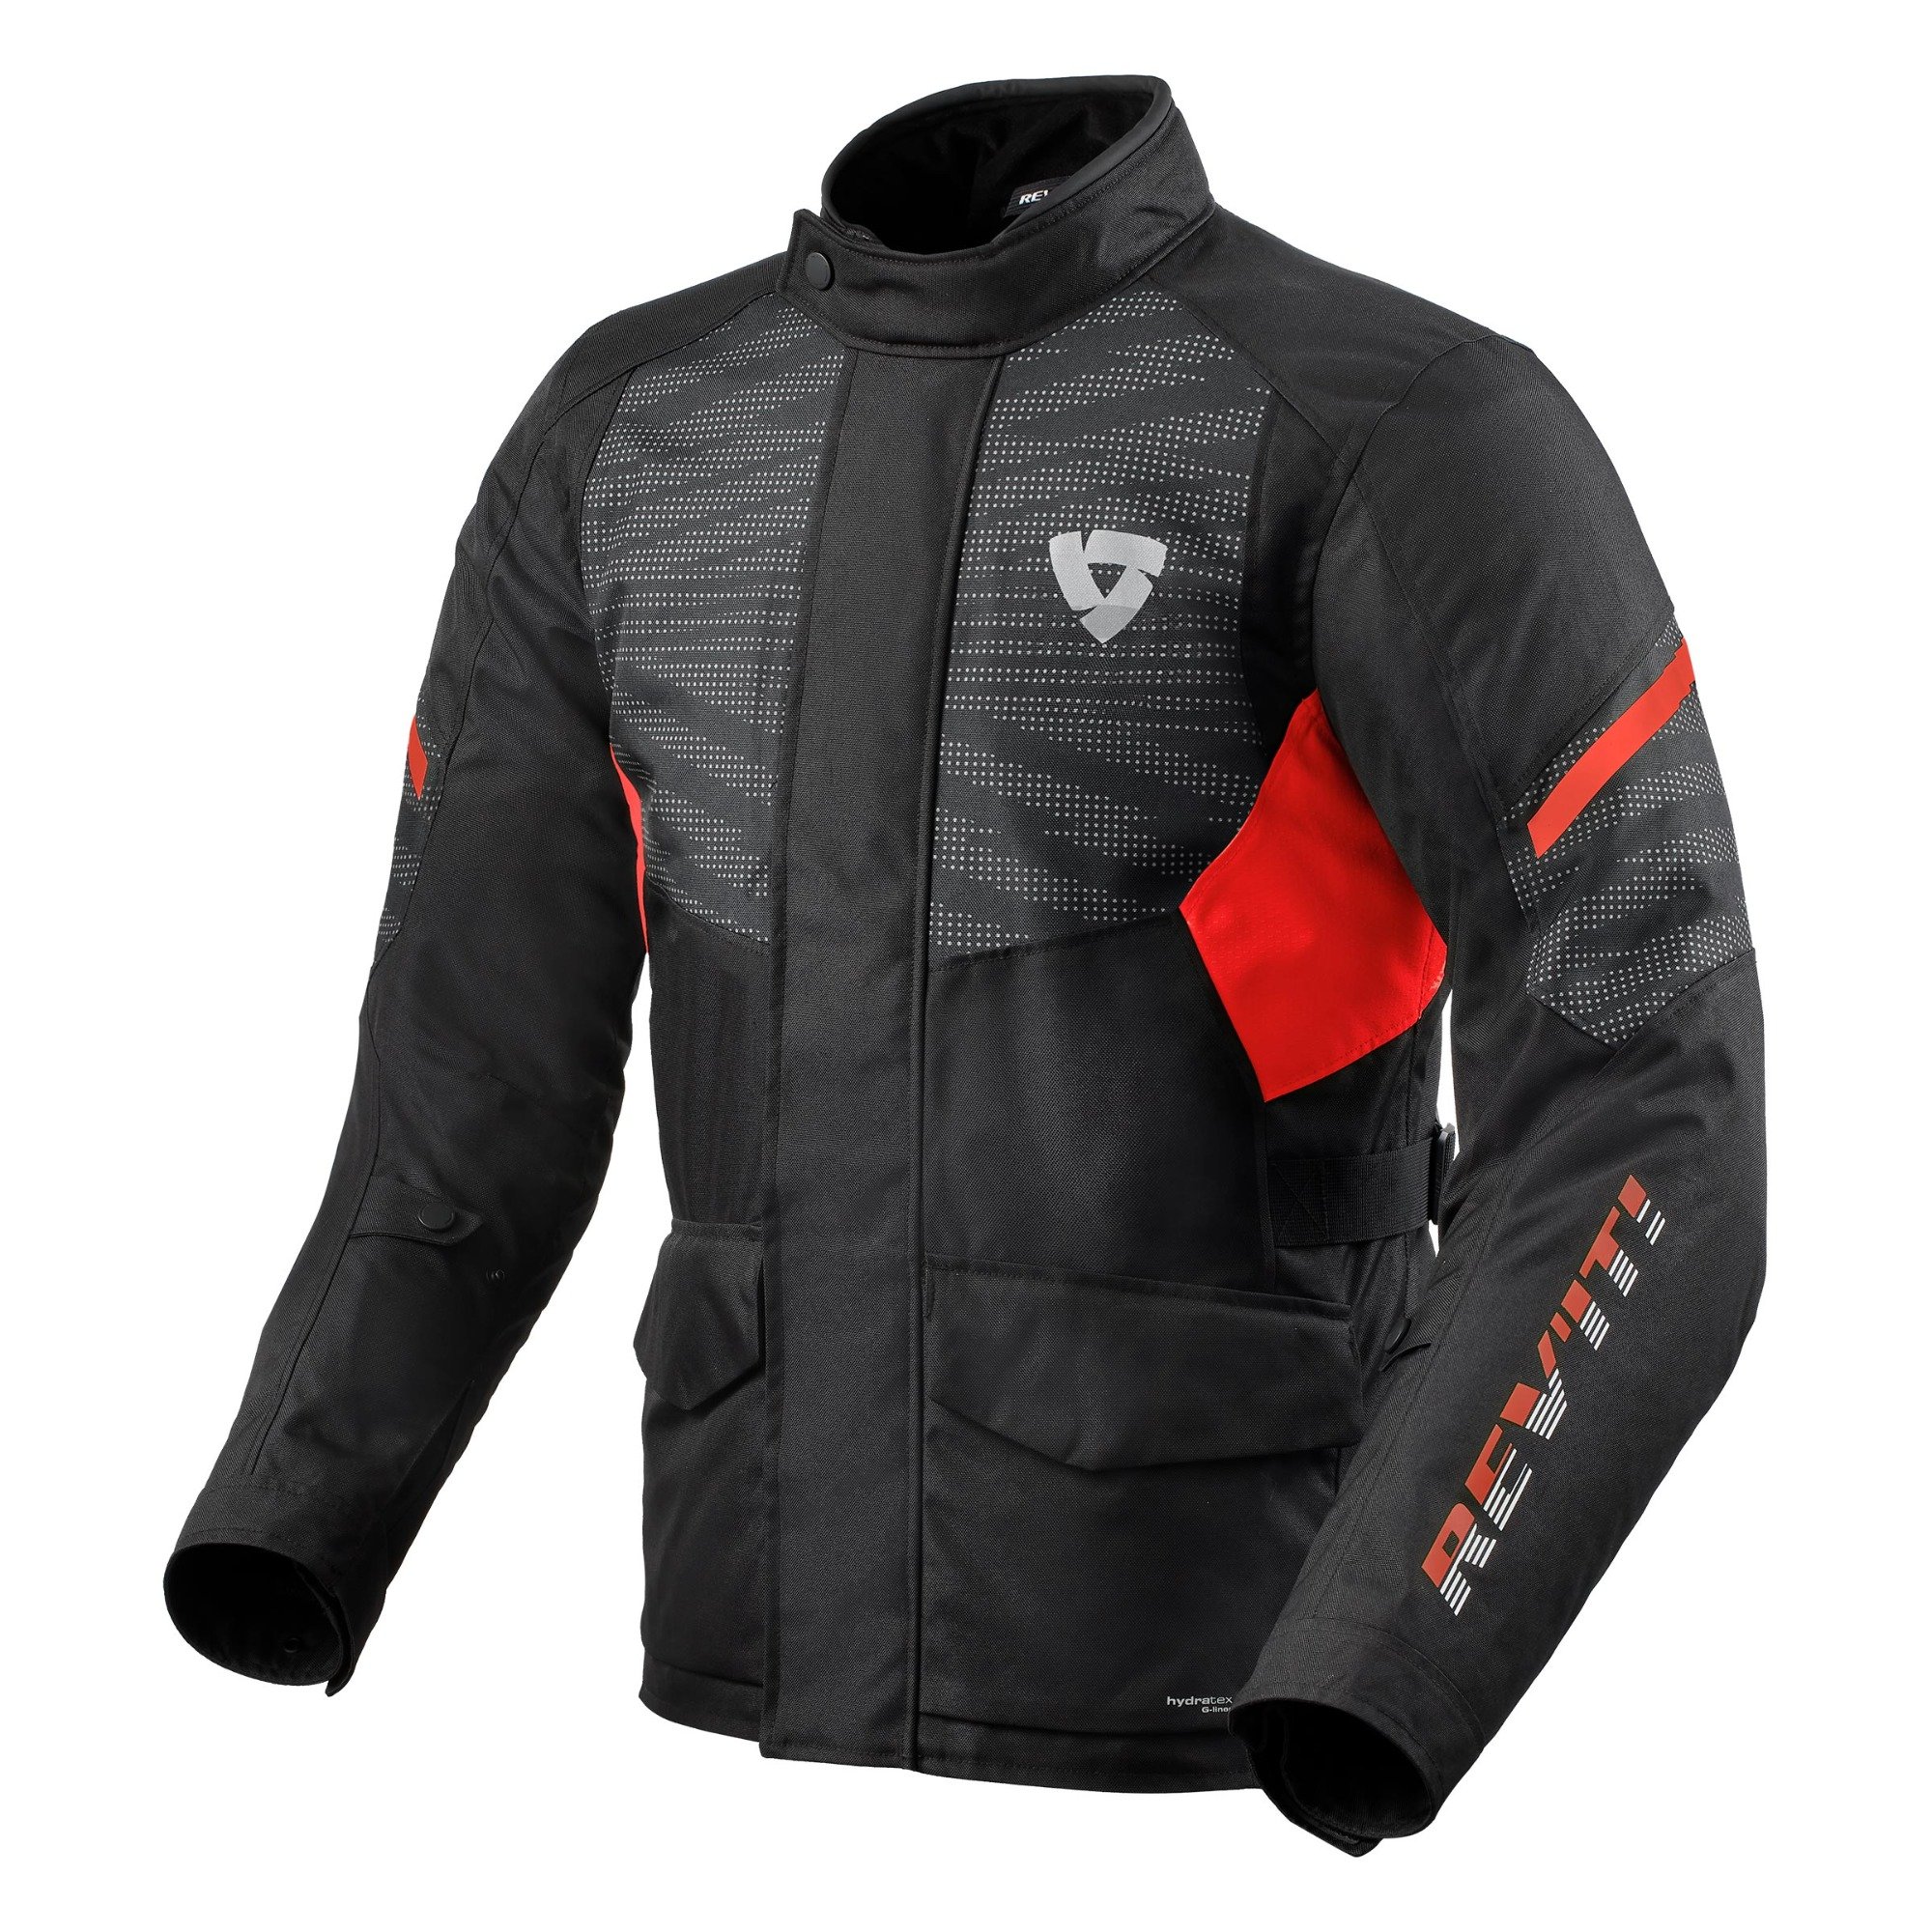 Image of REV'IT! Duke H2O Jacket Black Red Size XL EN